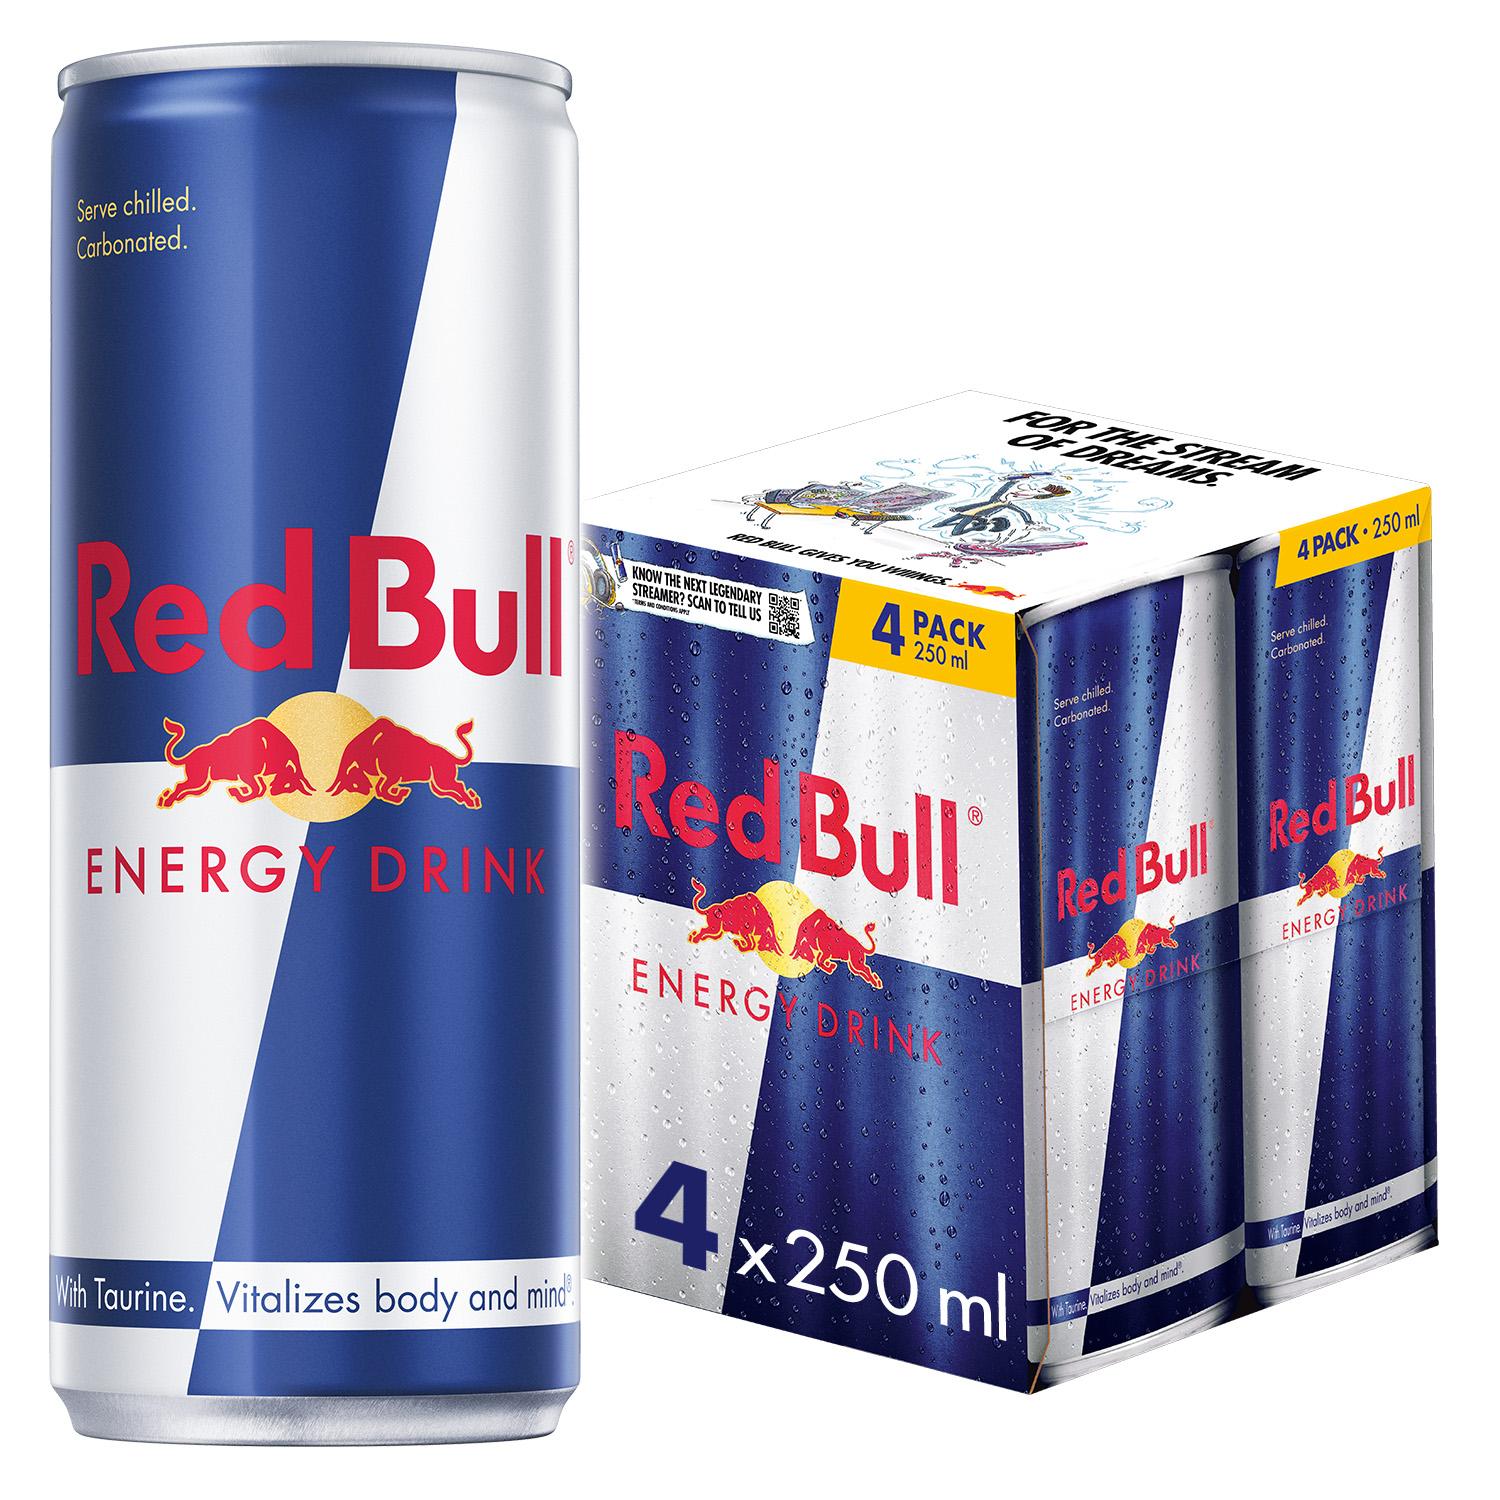 Red Bull on-pack promotion for emerging streaming stars